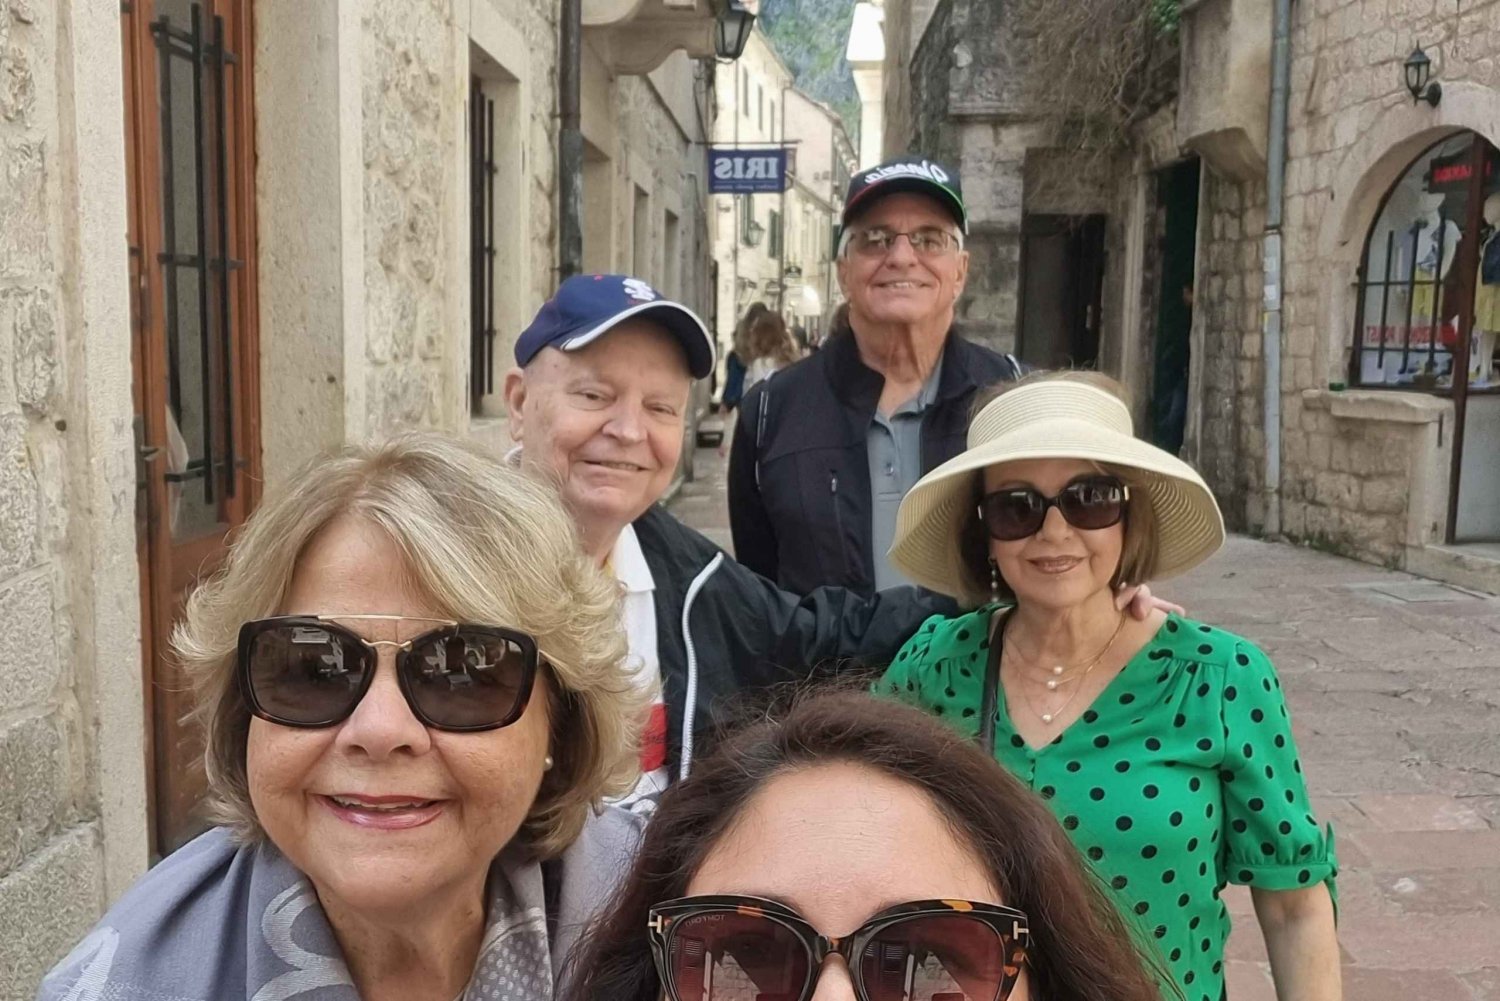 Kotor Old Town Small-Group Walking Tour